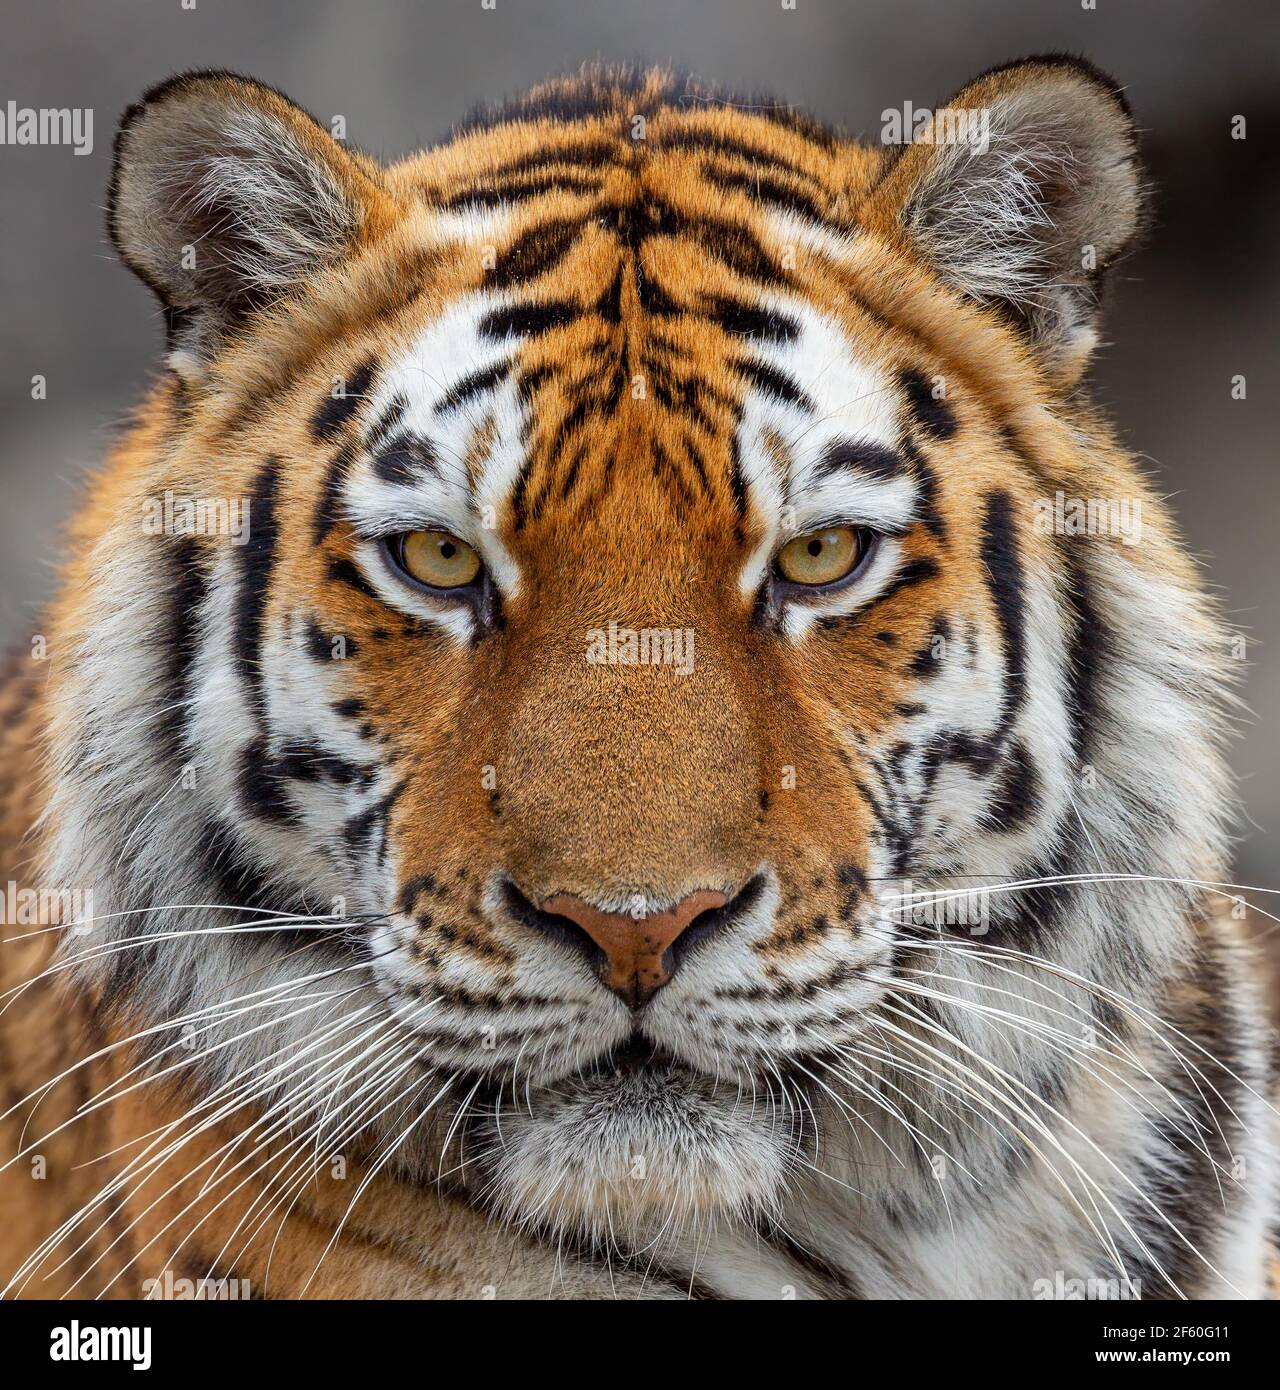 Gros plan frontal d'un tigre de Sibérie (Panthera tigris altaica) Banque D'Images